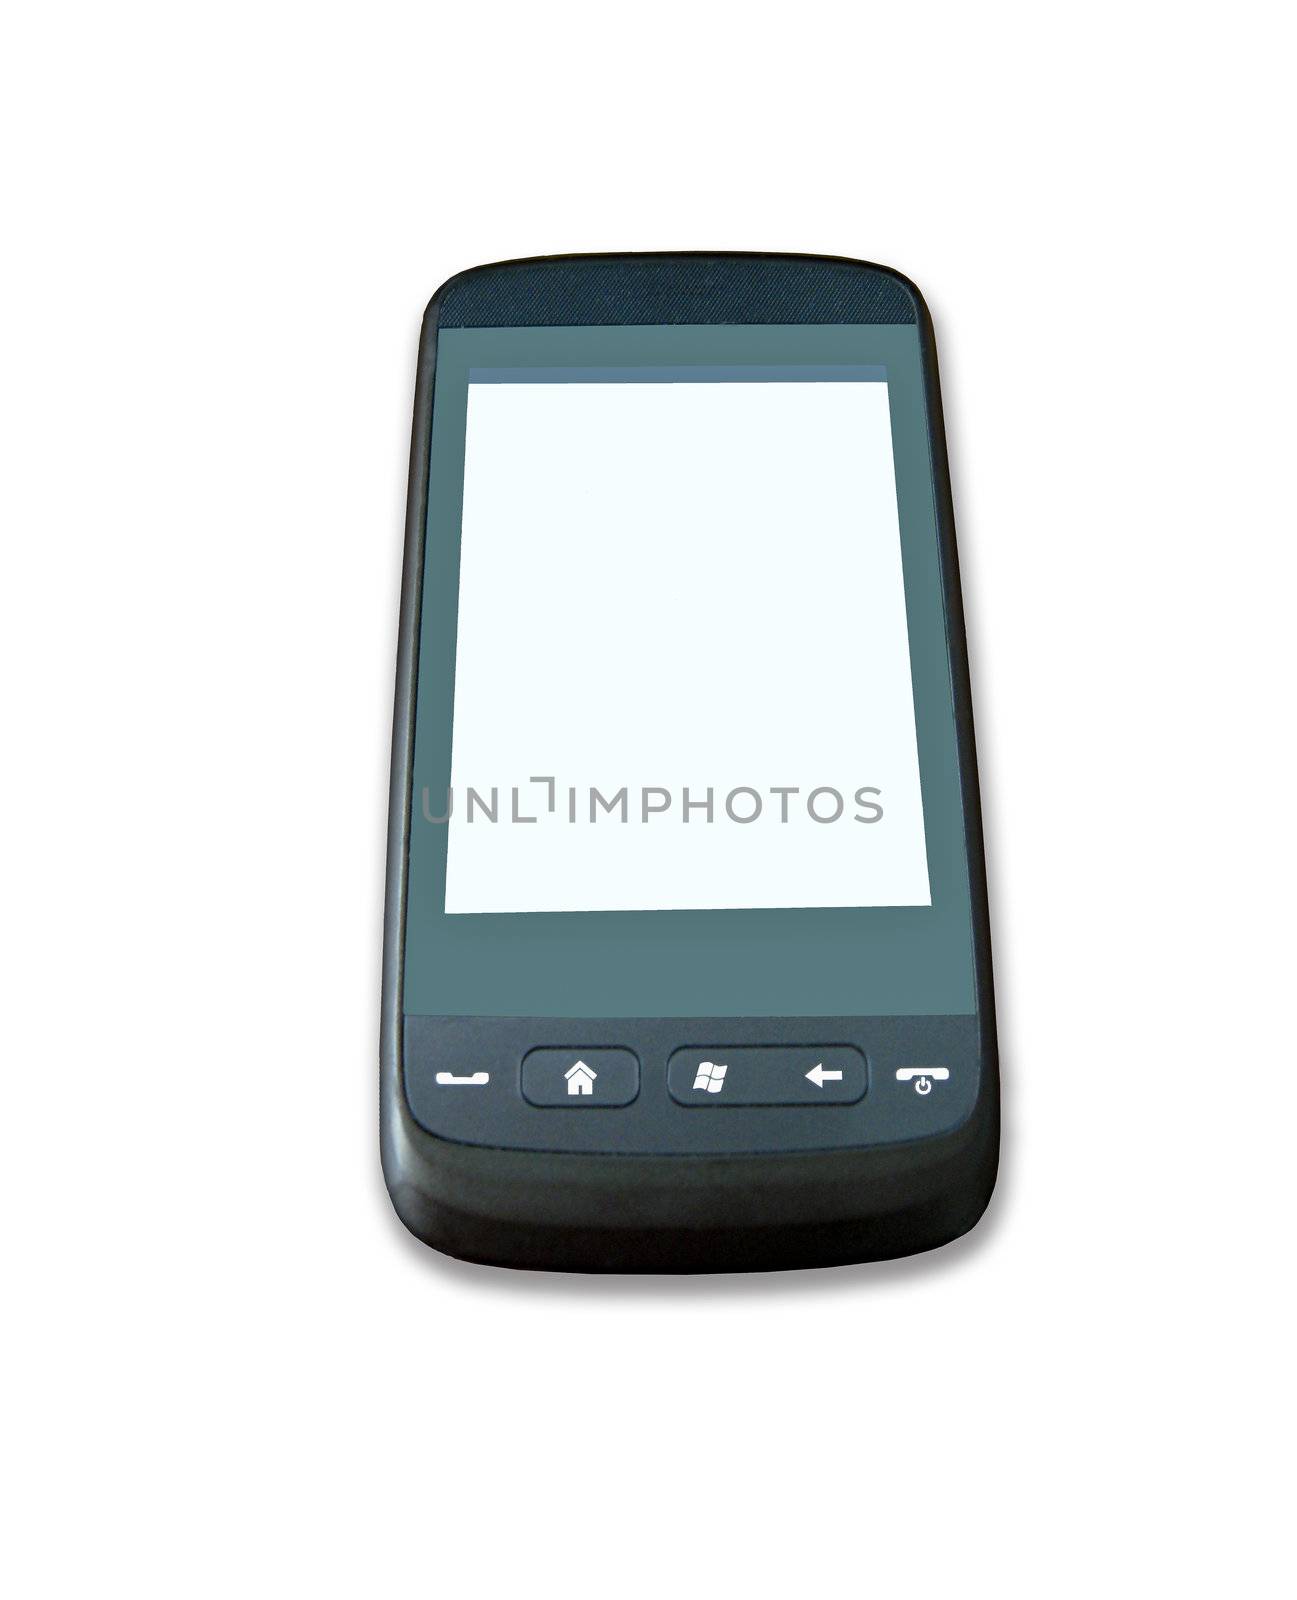 The image of modern phone of type  ipad